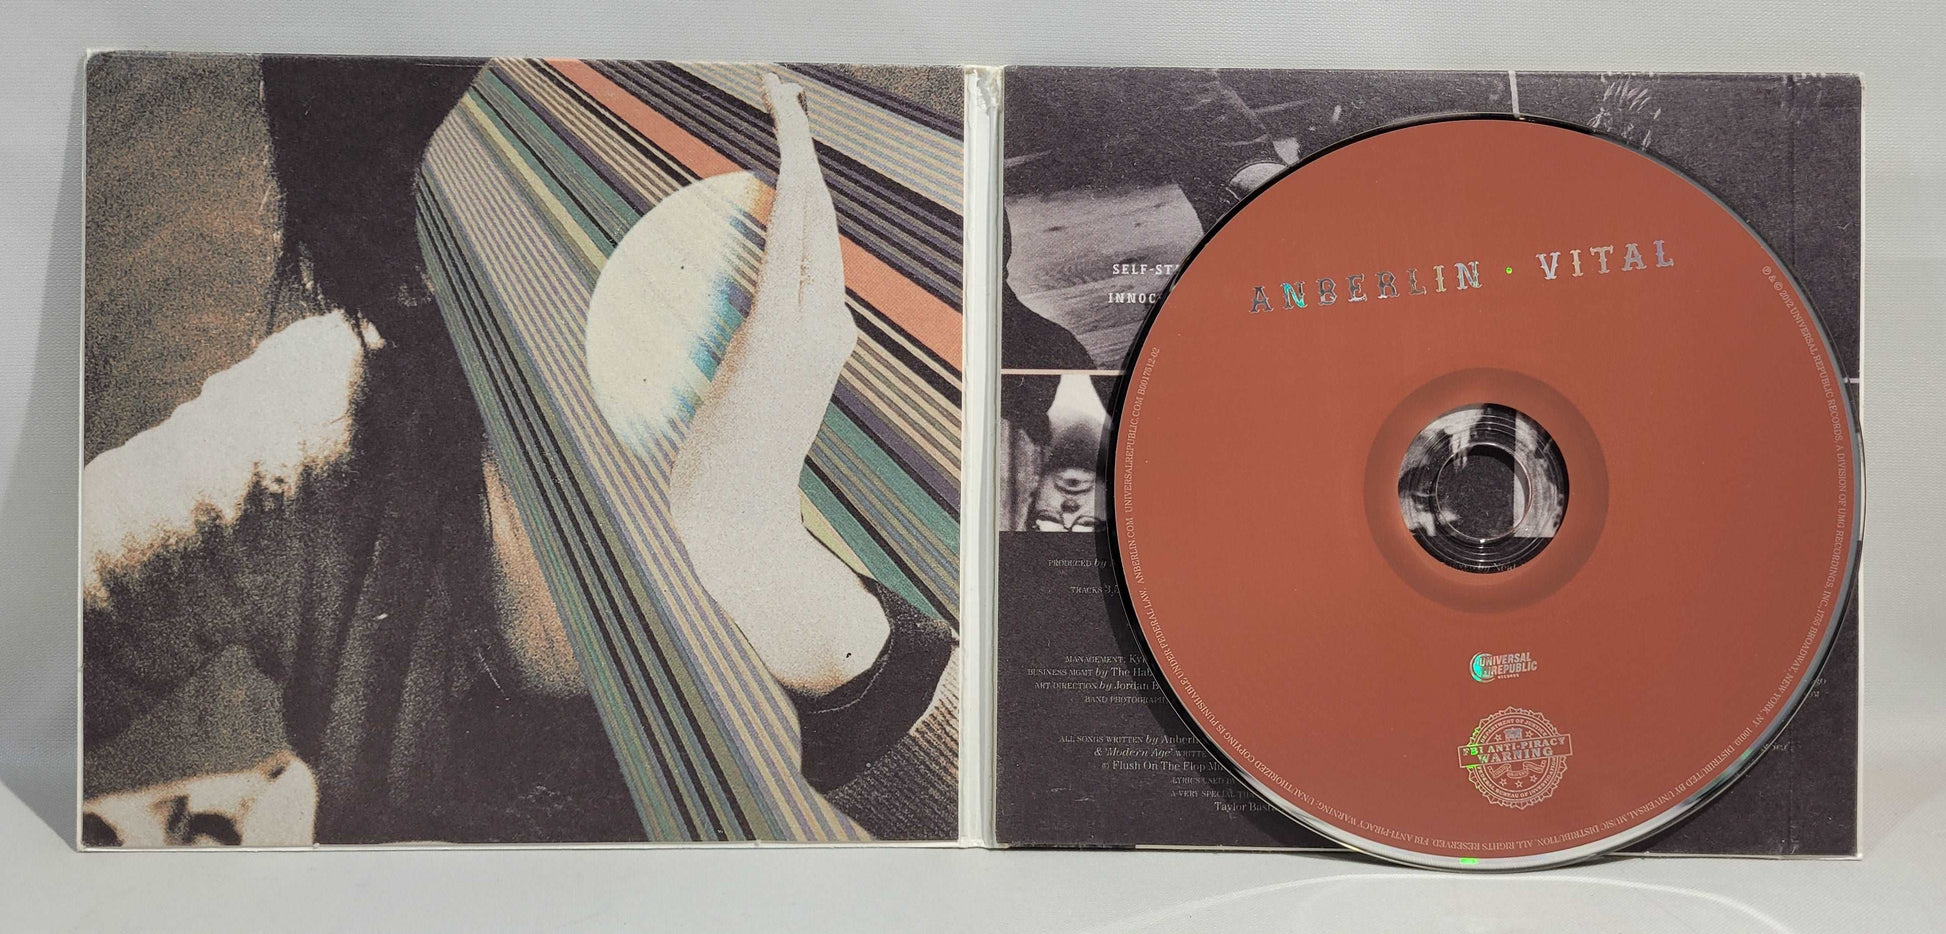 Anberlin - Vital [CD]